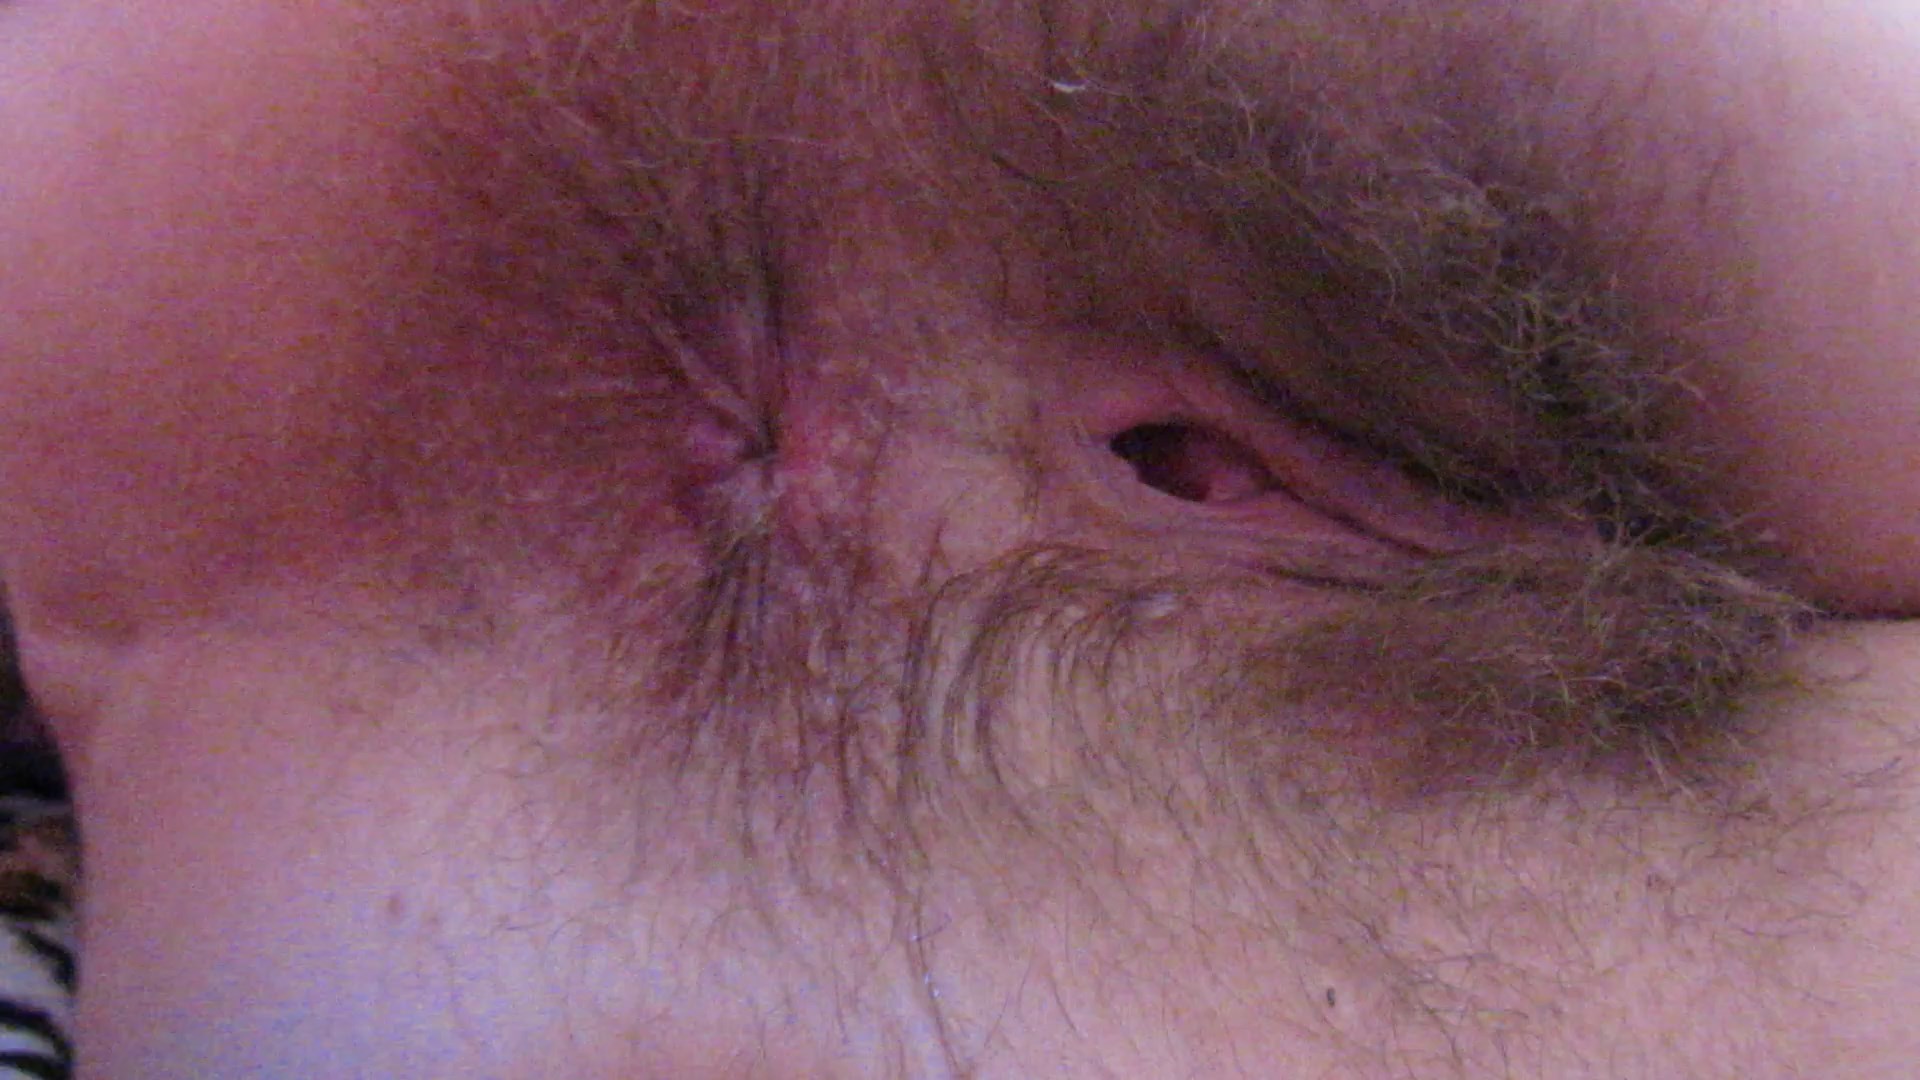 cuteblonde666 - Winking my wet hairy asshole in closeup 1080p